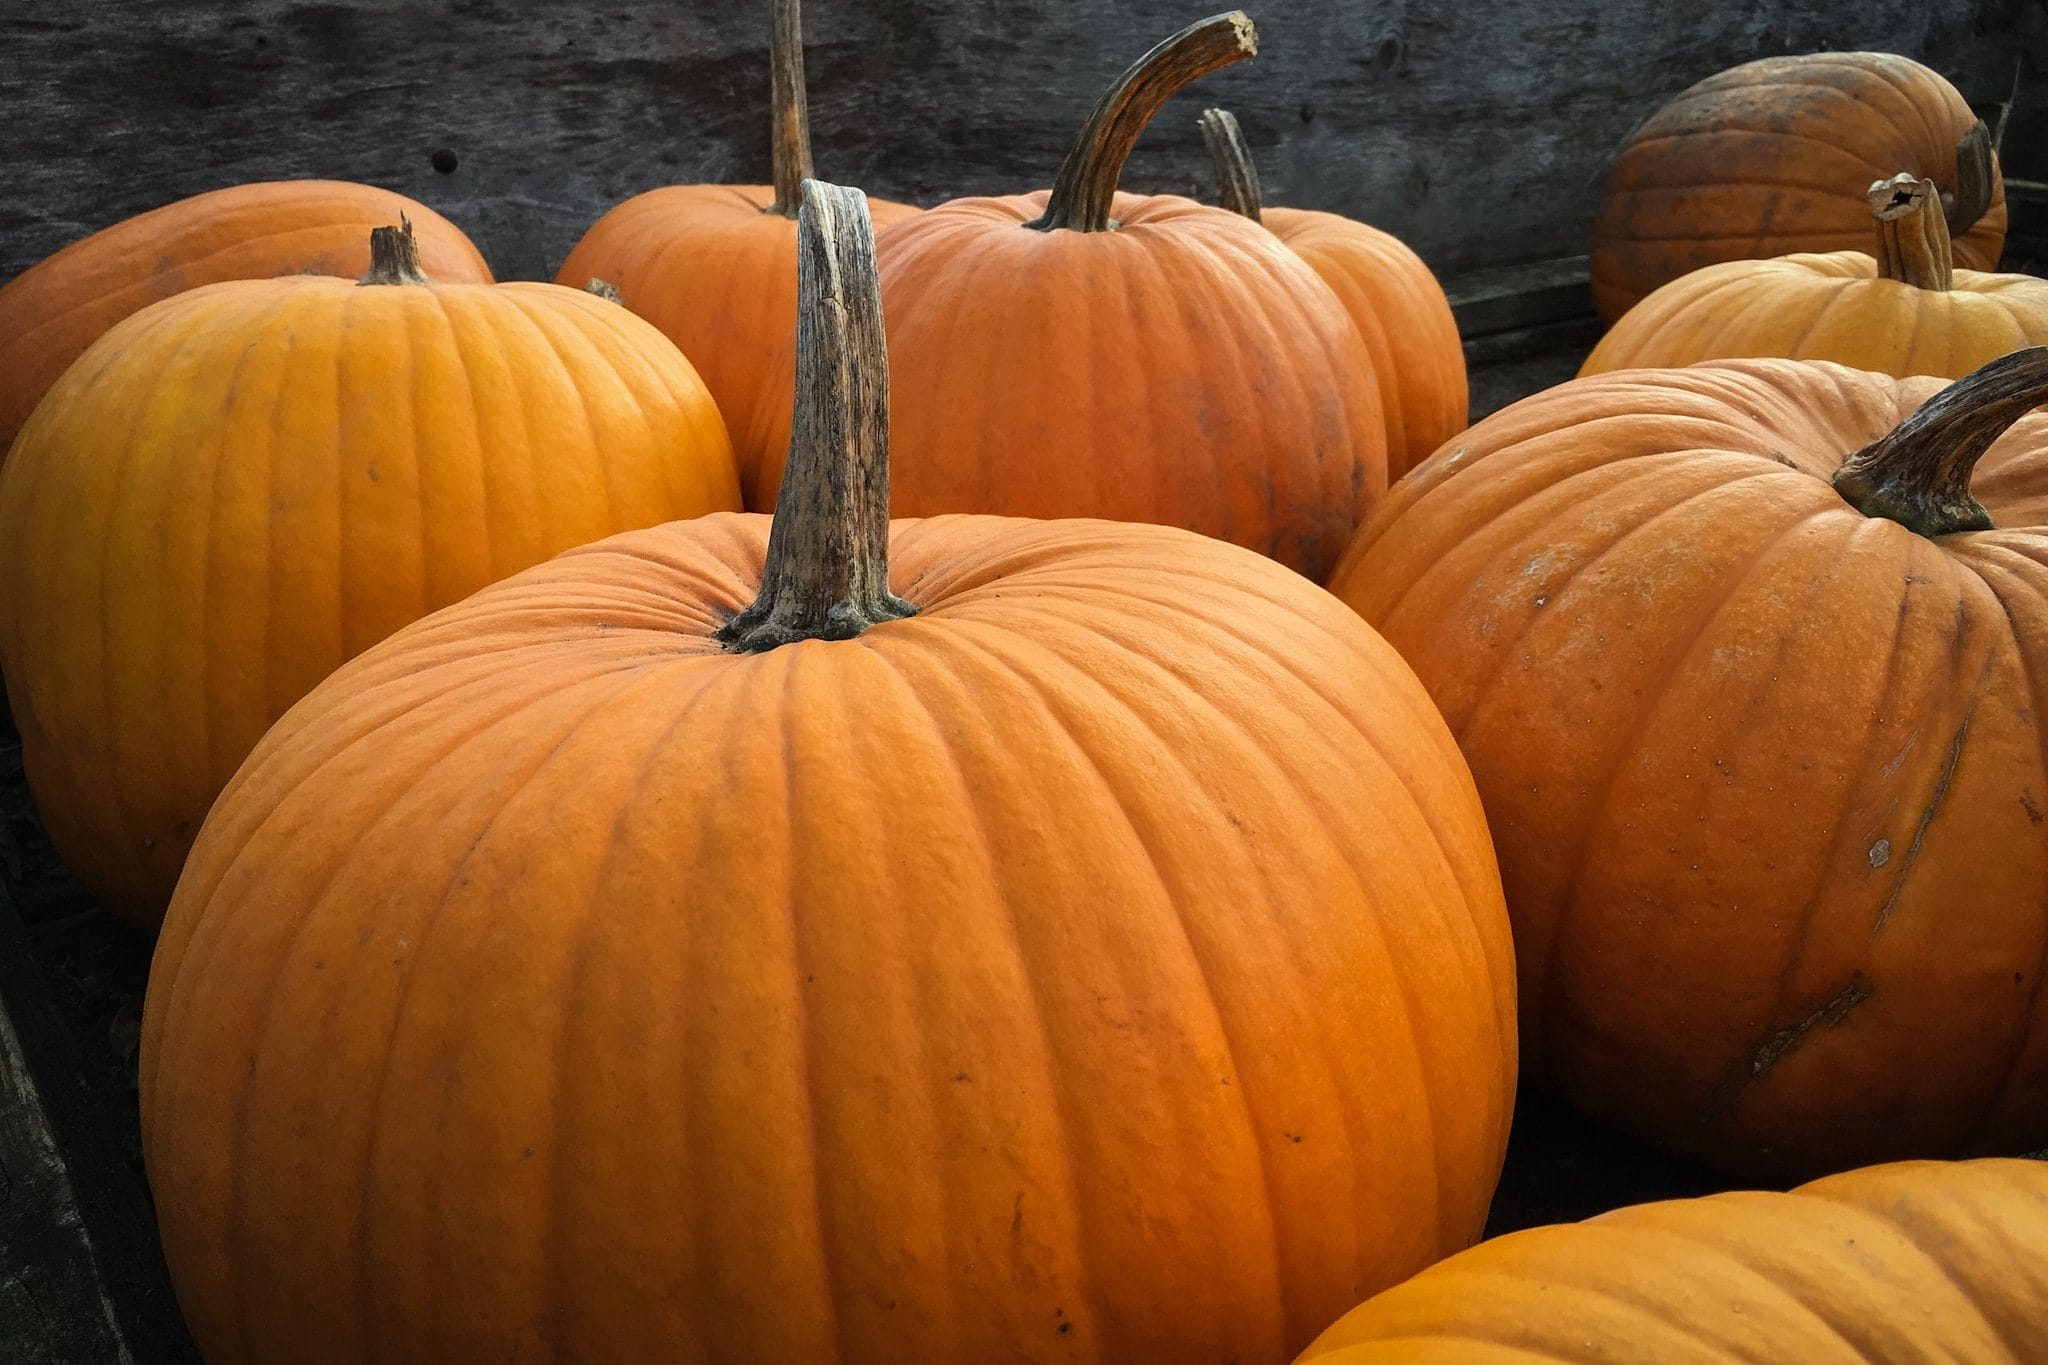 a nice image of some pumpkins around halloween time